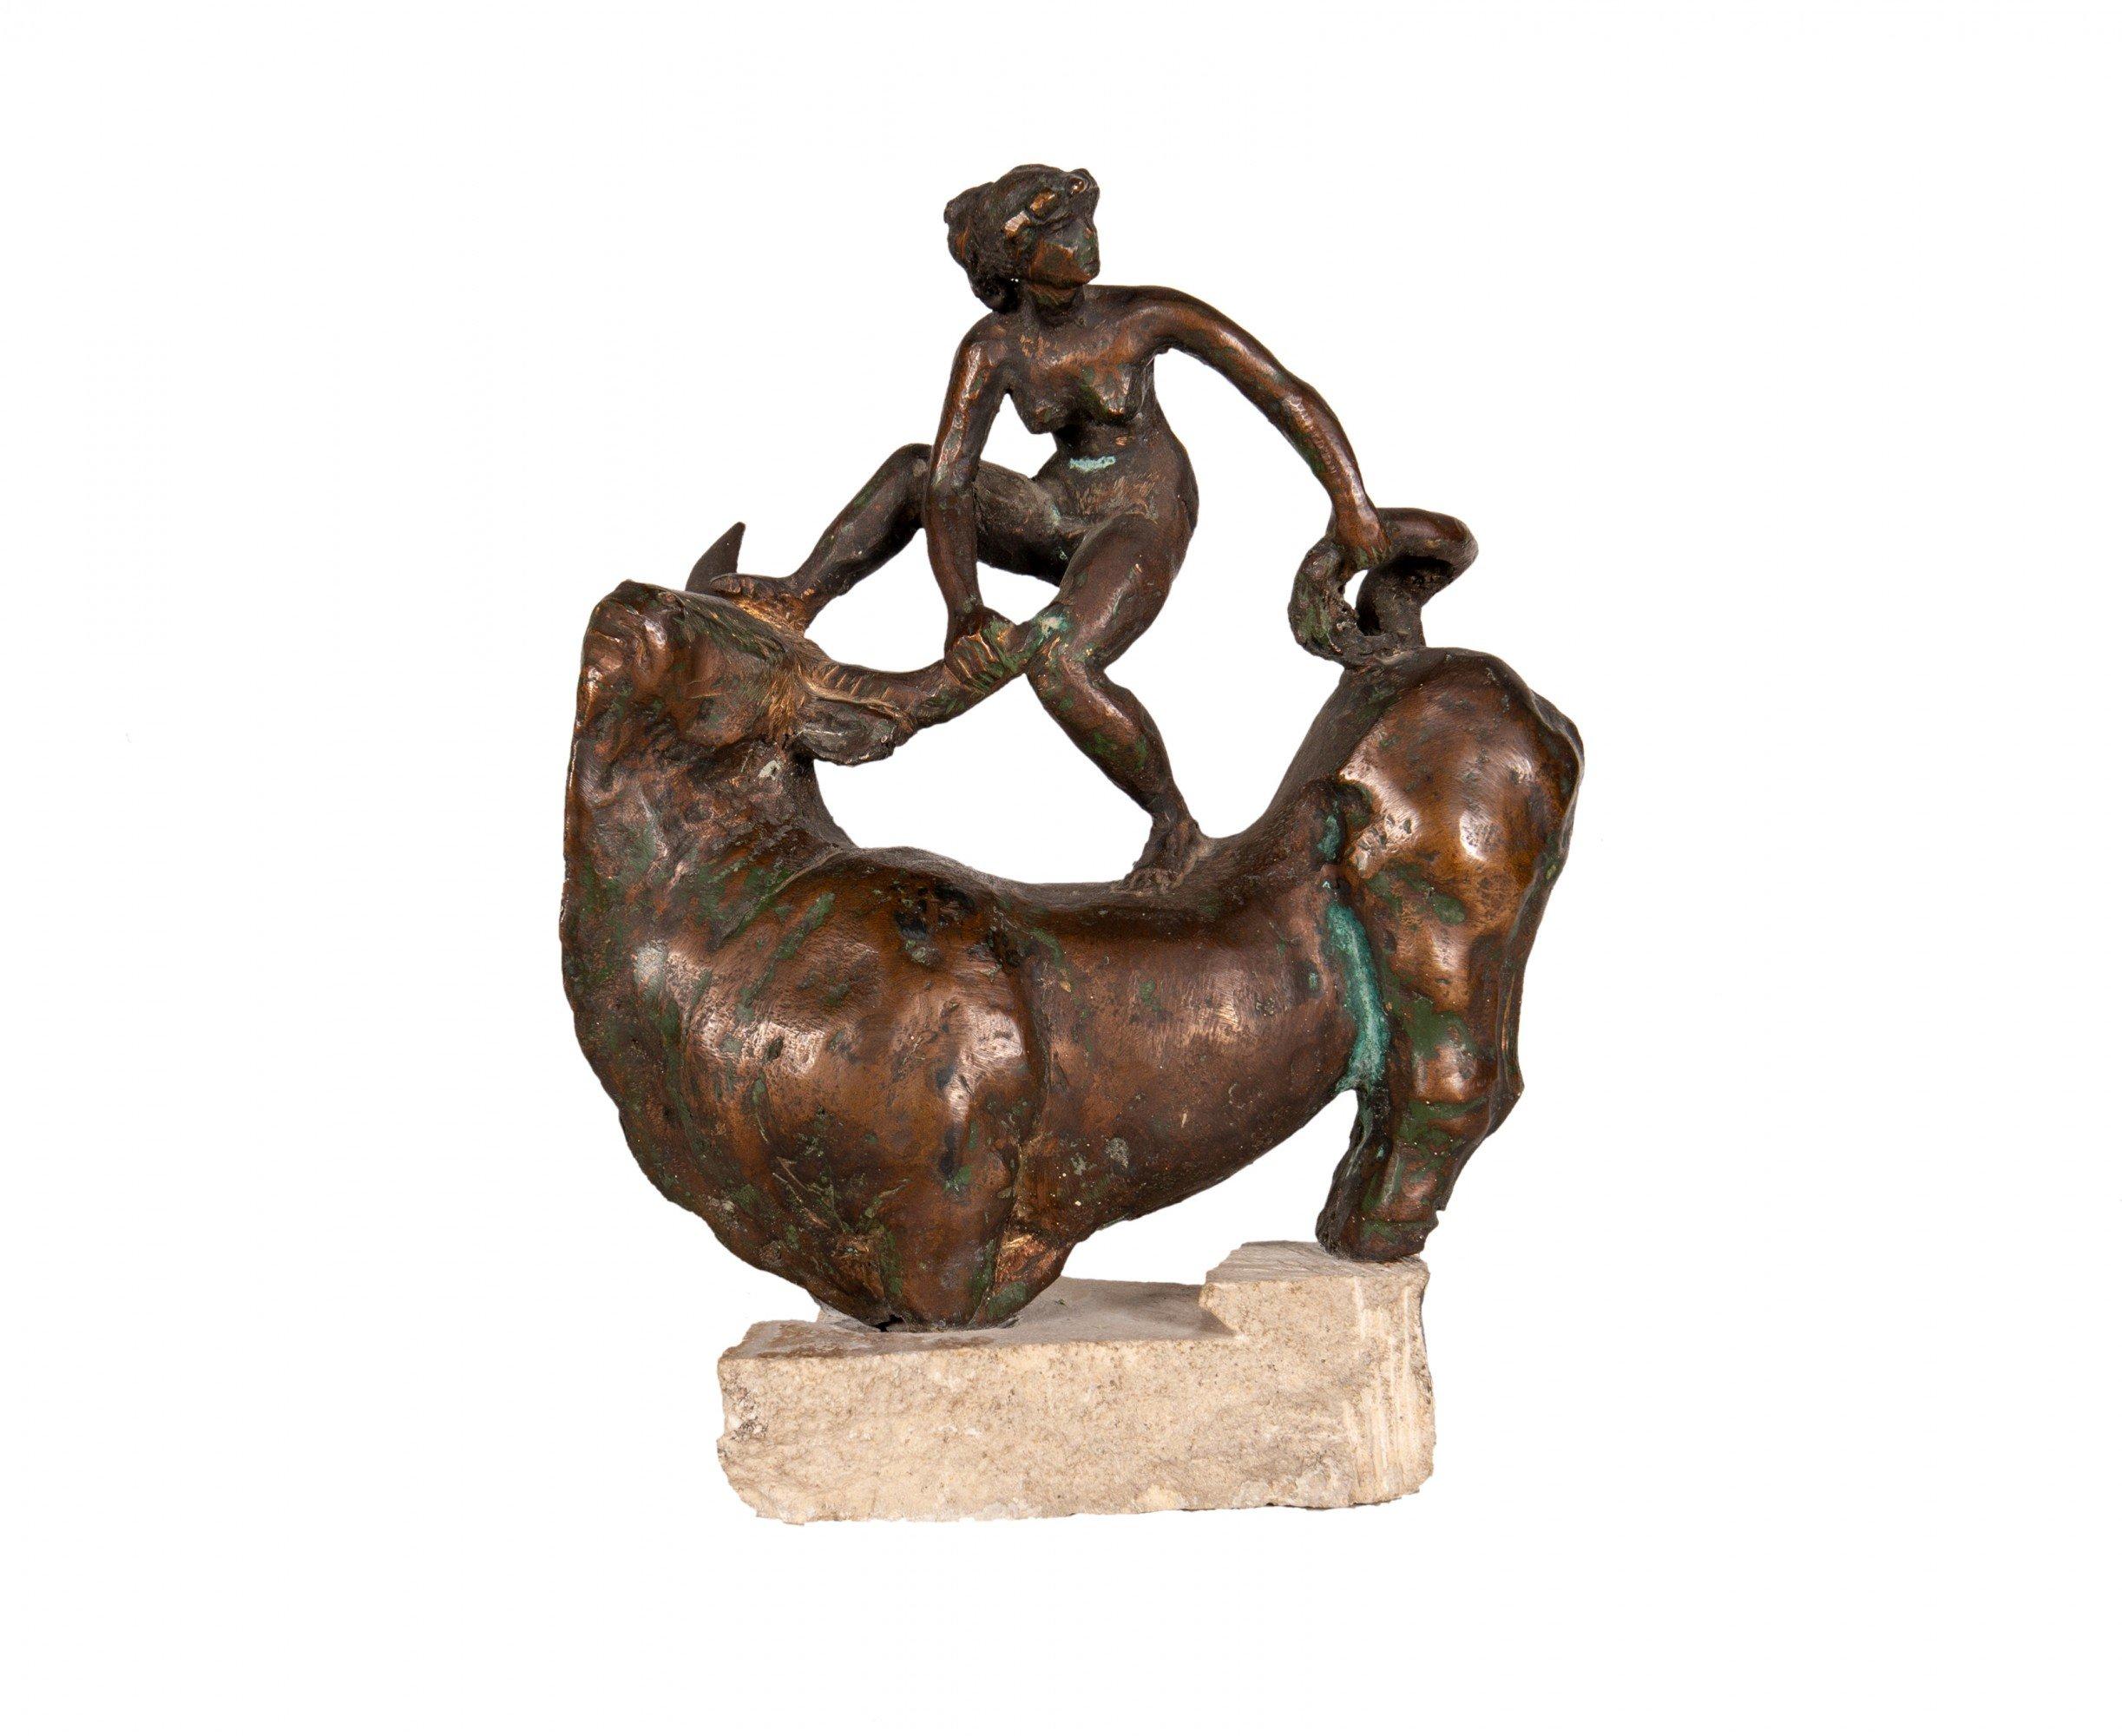 Unknown Figurative Sculpture - 20th Century Continental School Bronze Figure of Europa and the Bull